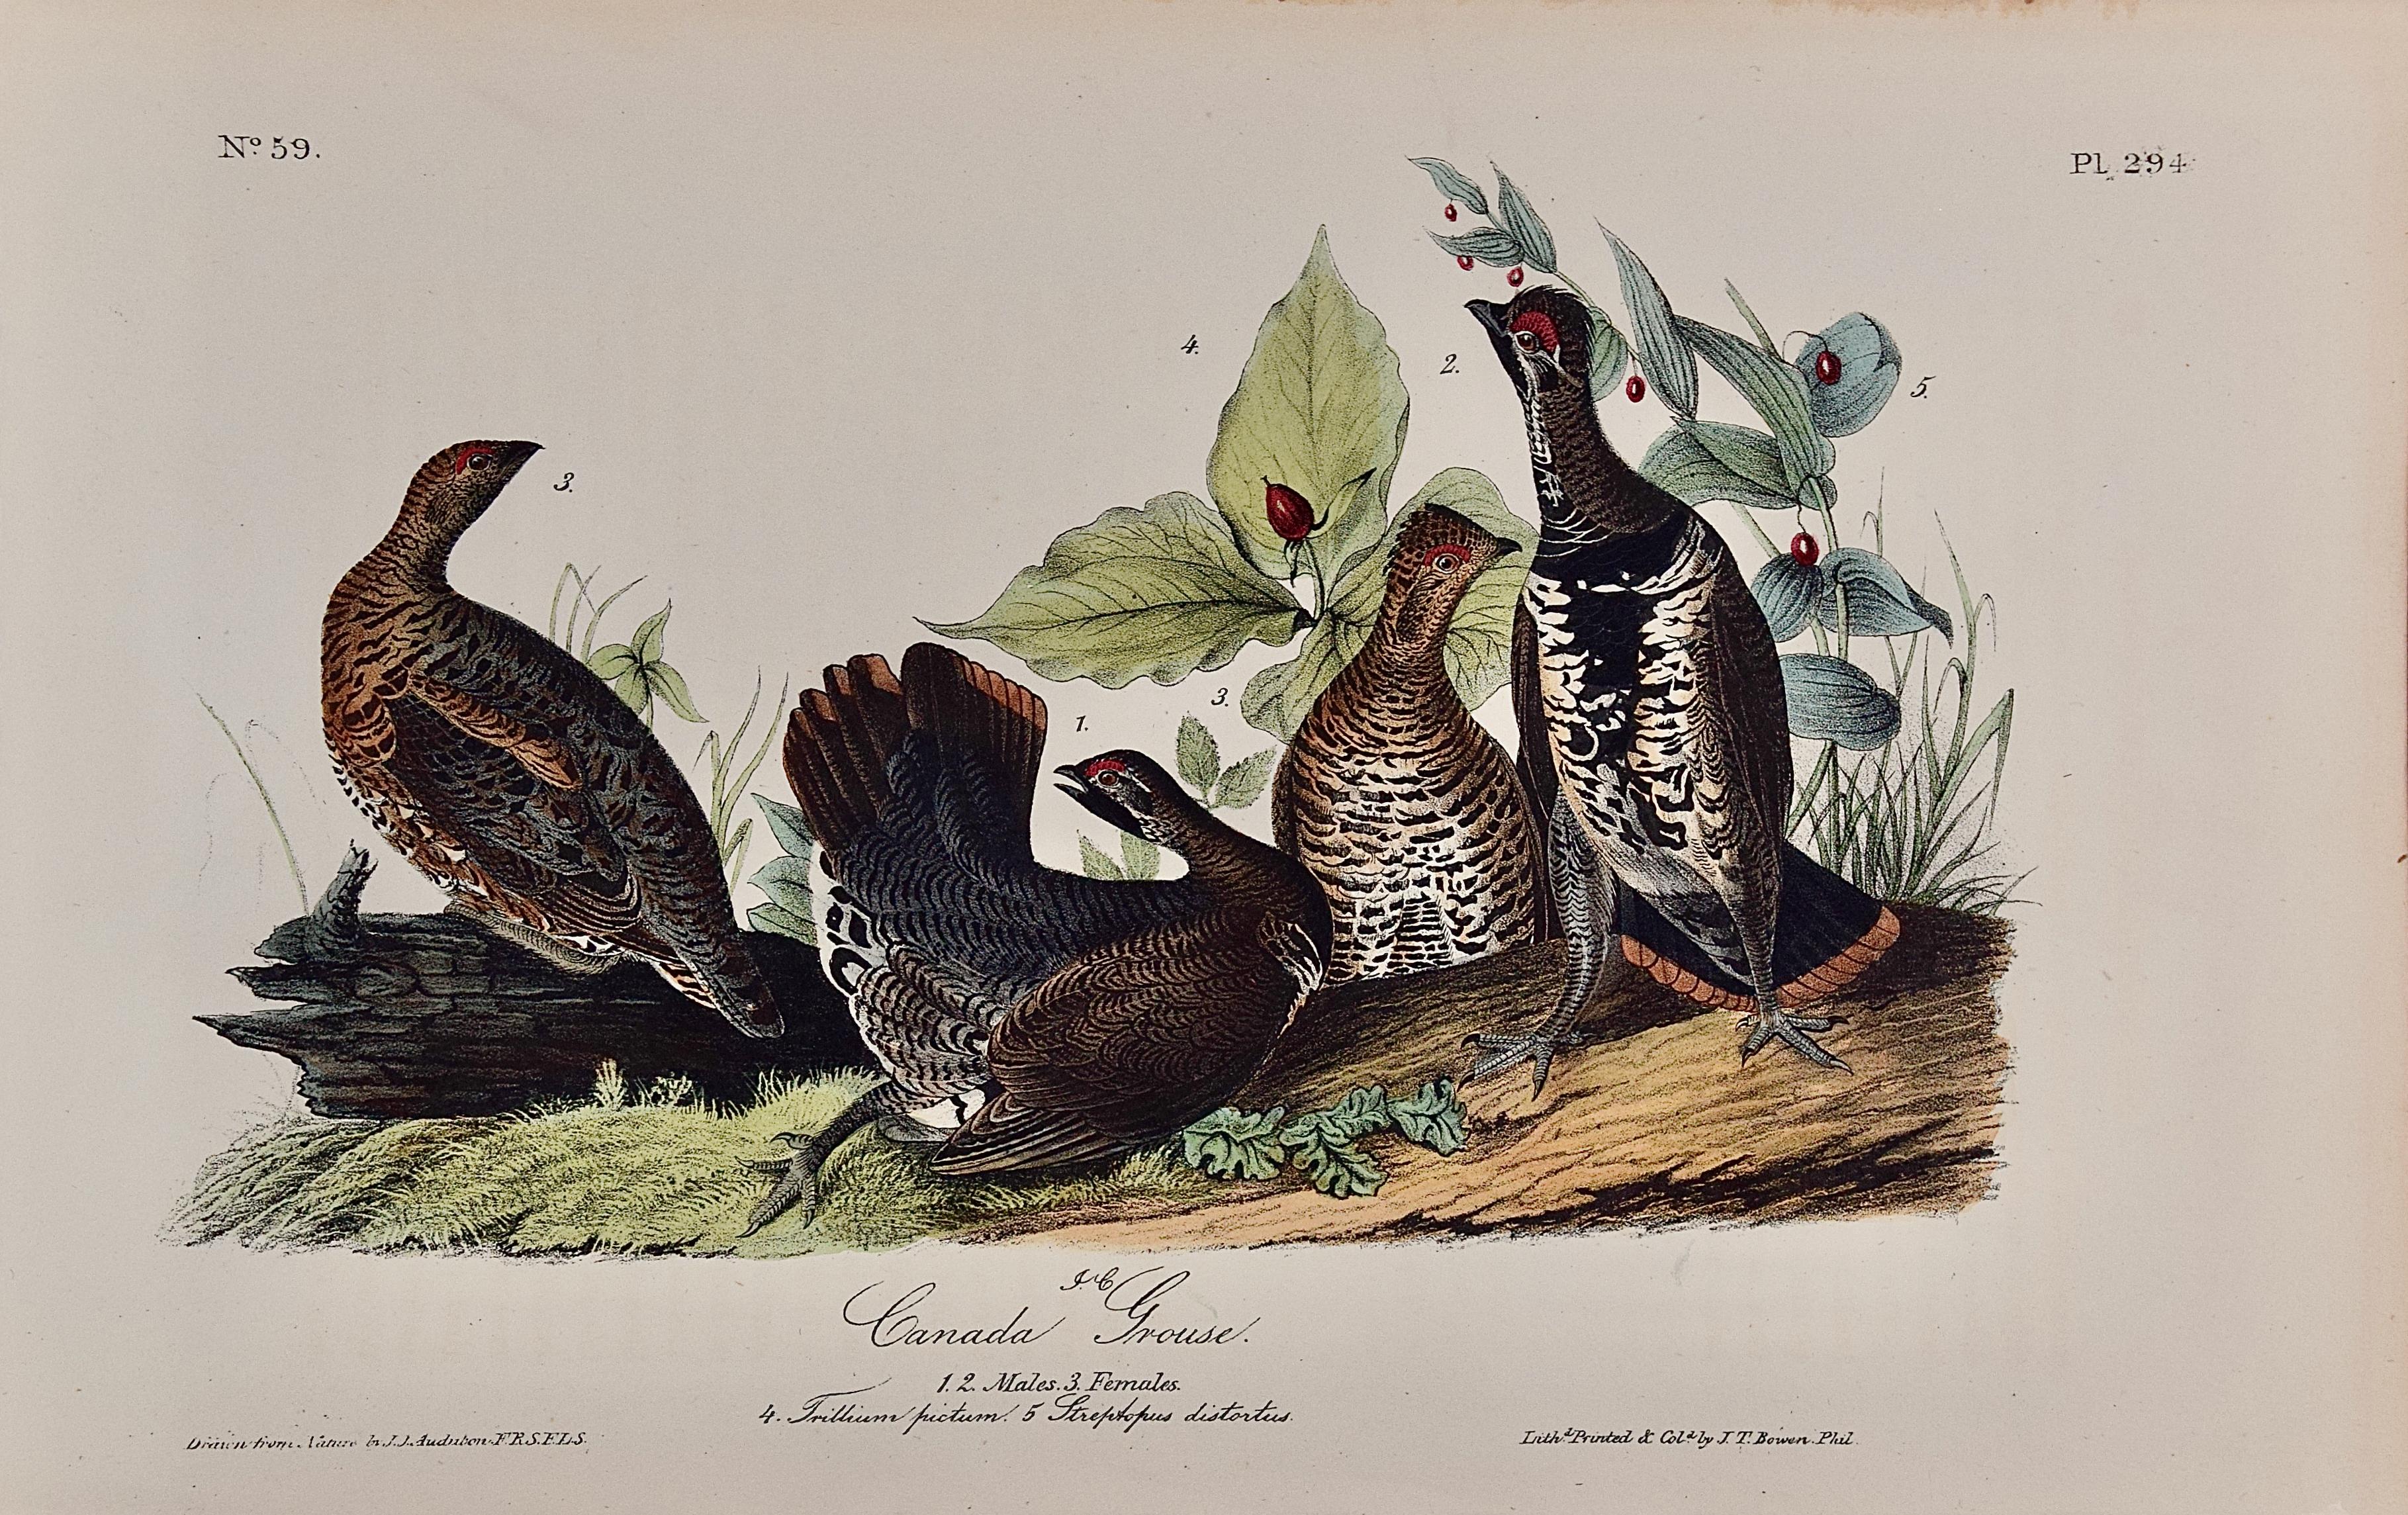 John James Audubon Animal Print – Kanada Grouse: Ein Original des 19. Jahrhunderts, Audubon, 1. Auflage. Handkolorierte Vogellithographie